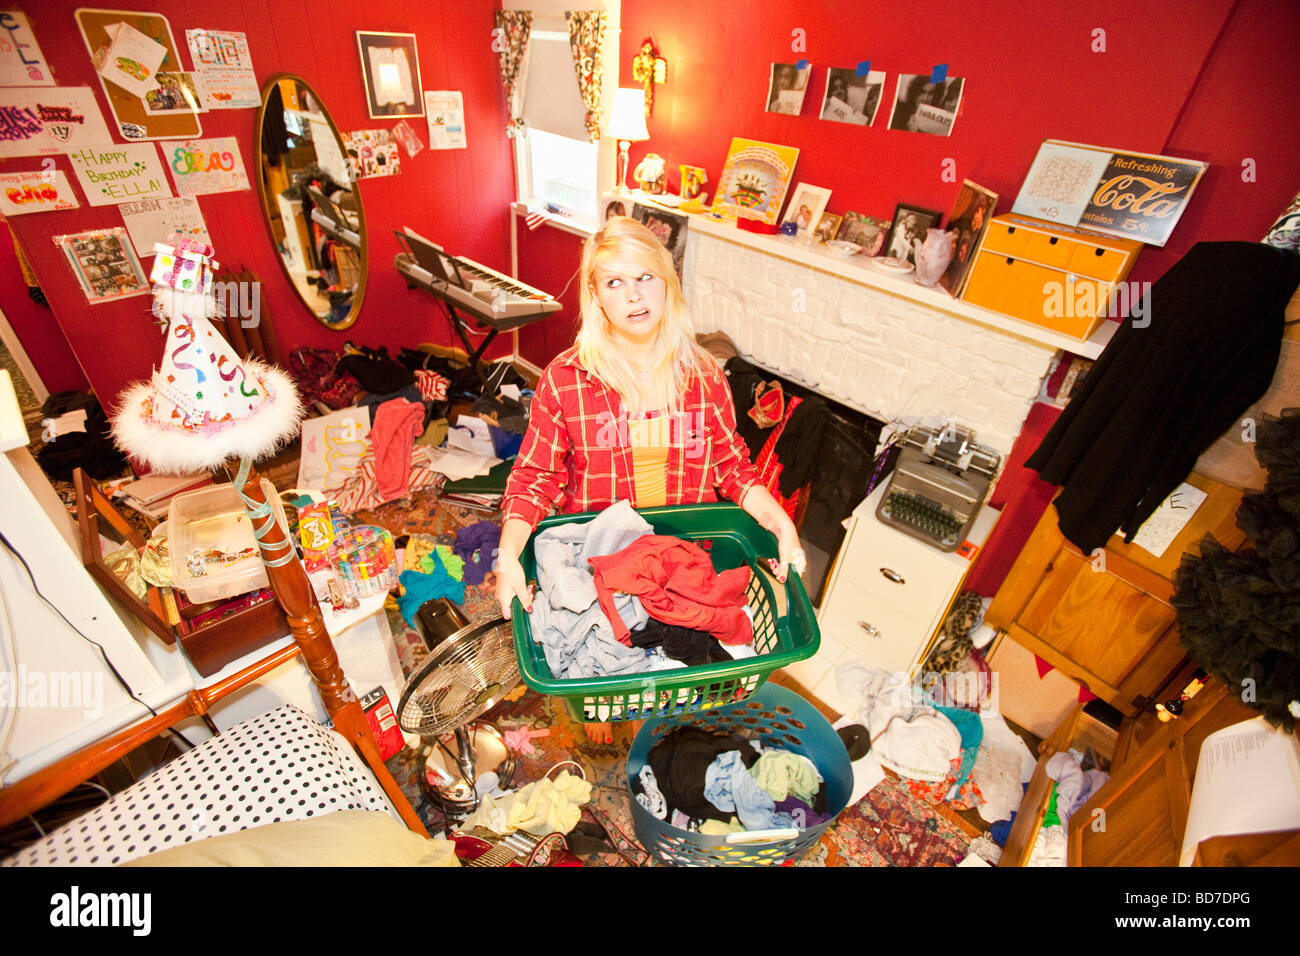 Teen girl in messy room Stock Photo